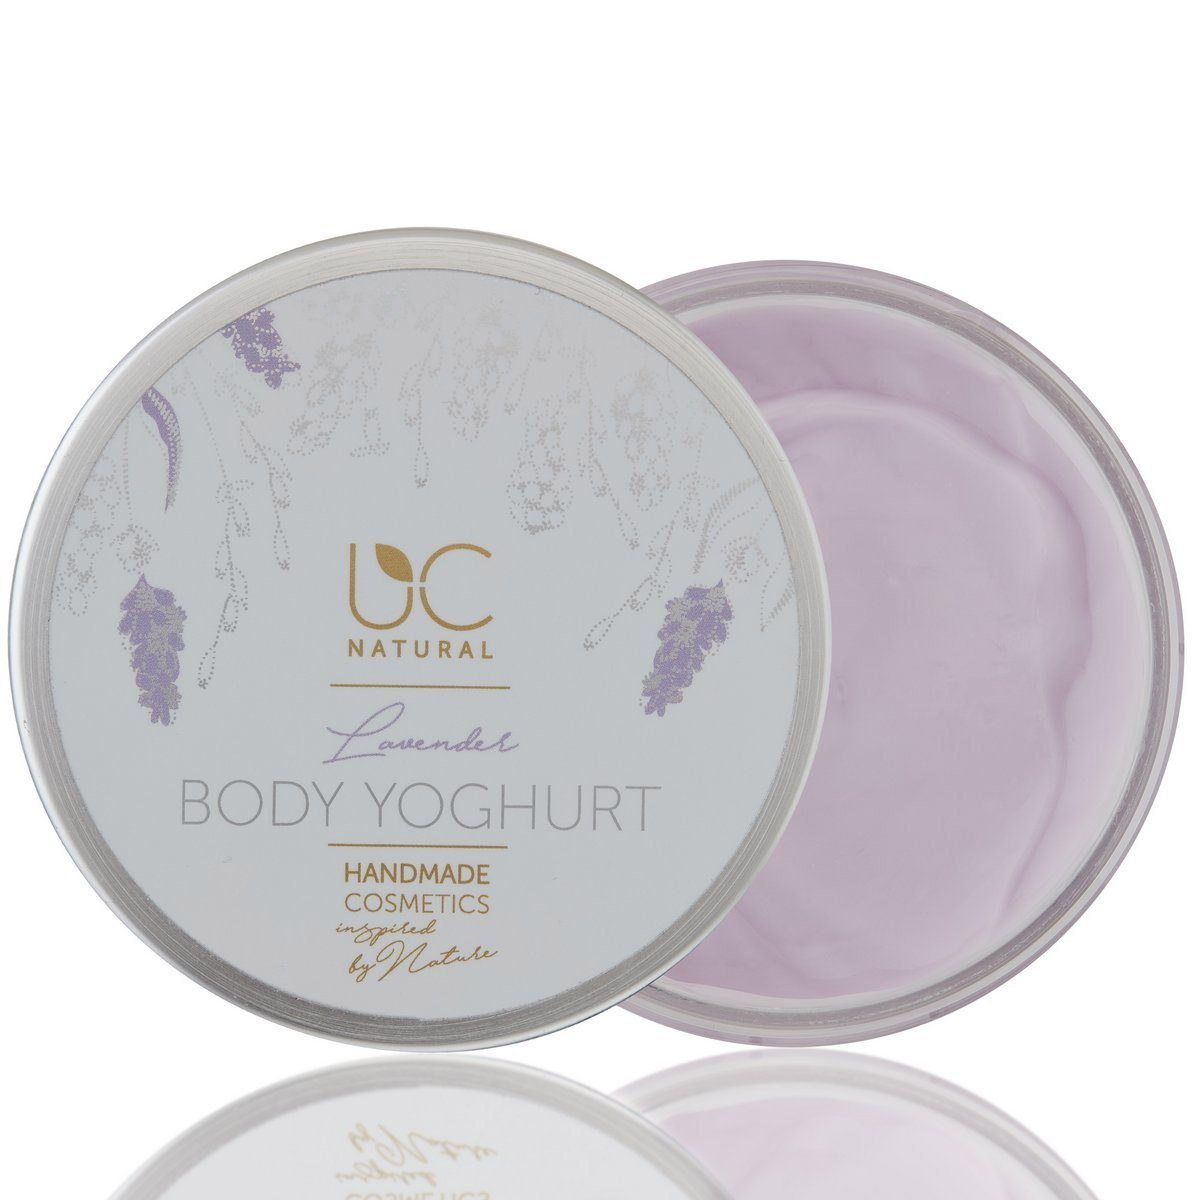 UC Natural Körpercreme UC Natural Body Yoghurt Set, 1-tlg., Lavendel Body Yoghurt handgemacht 220g vegan | Körpercremes